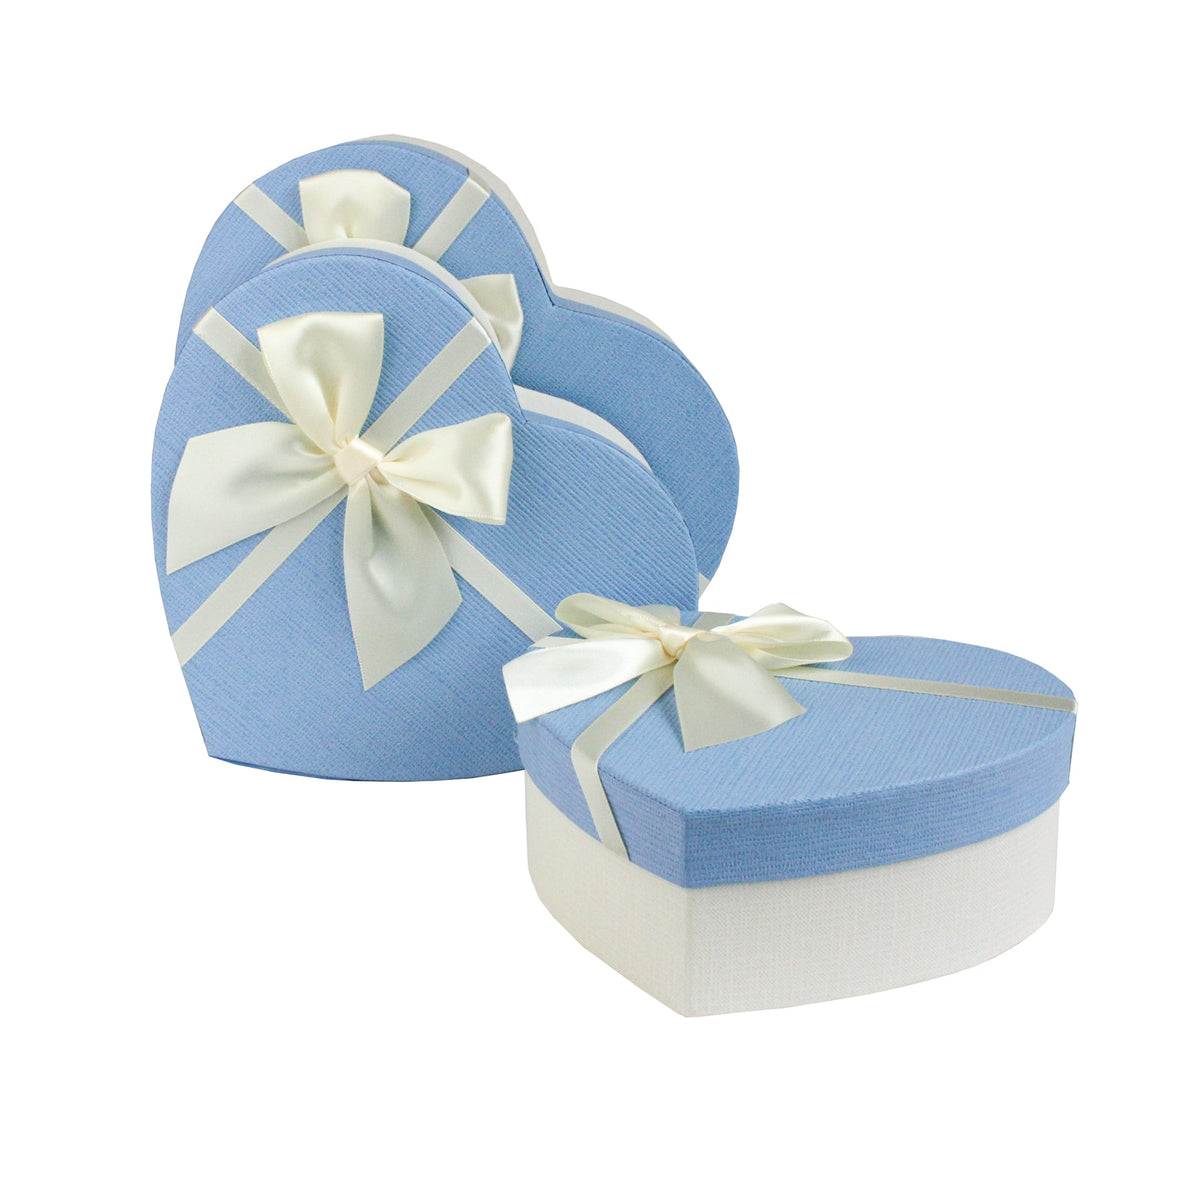 Luxury Heart Shaped White/Blue Gift Boxes - Set of 3